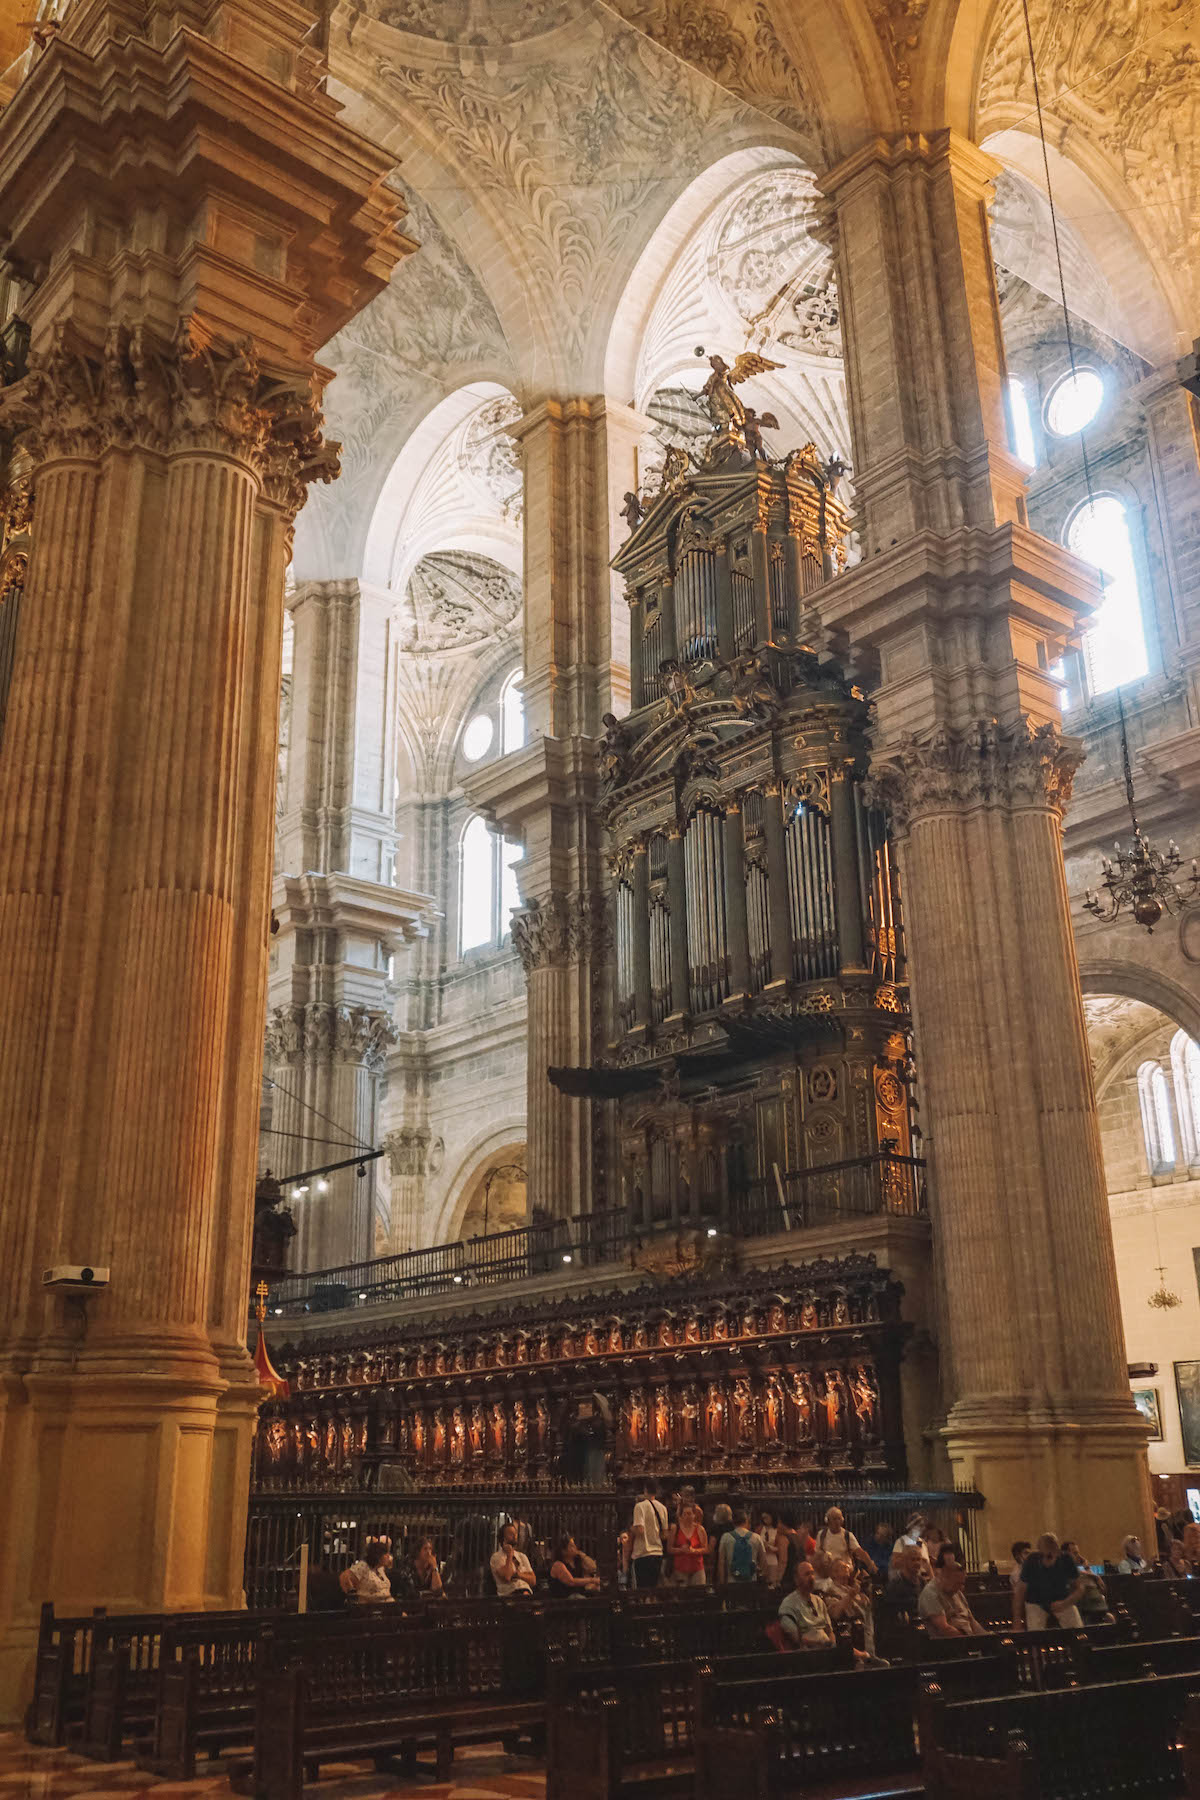 An organ inside the Malaga Cathedral